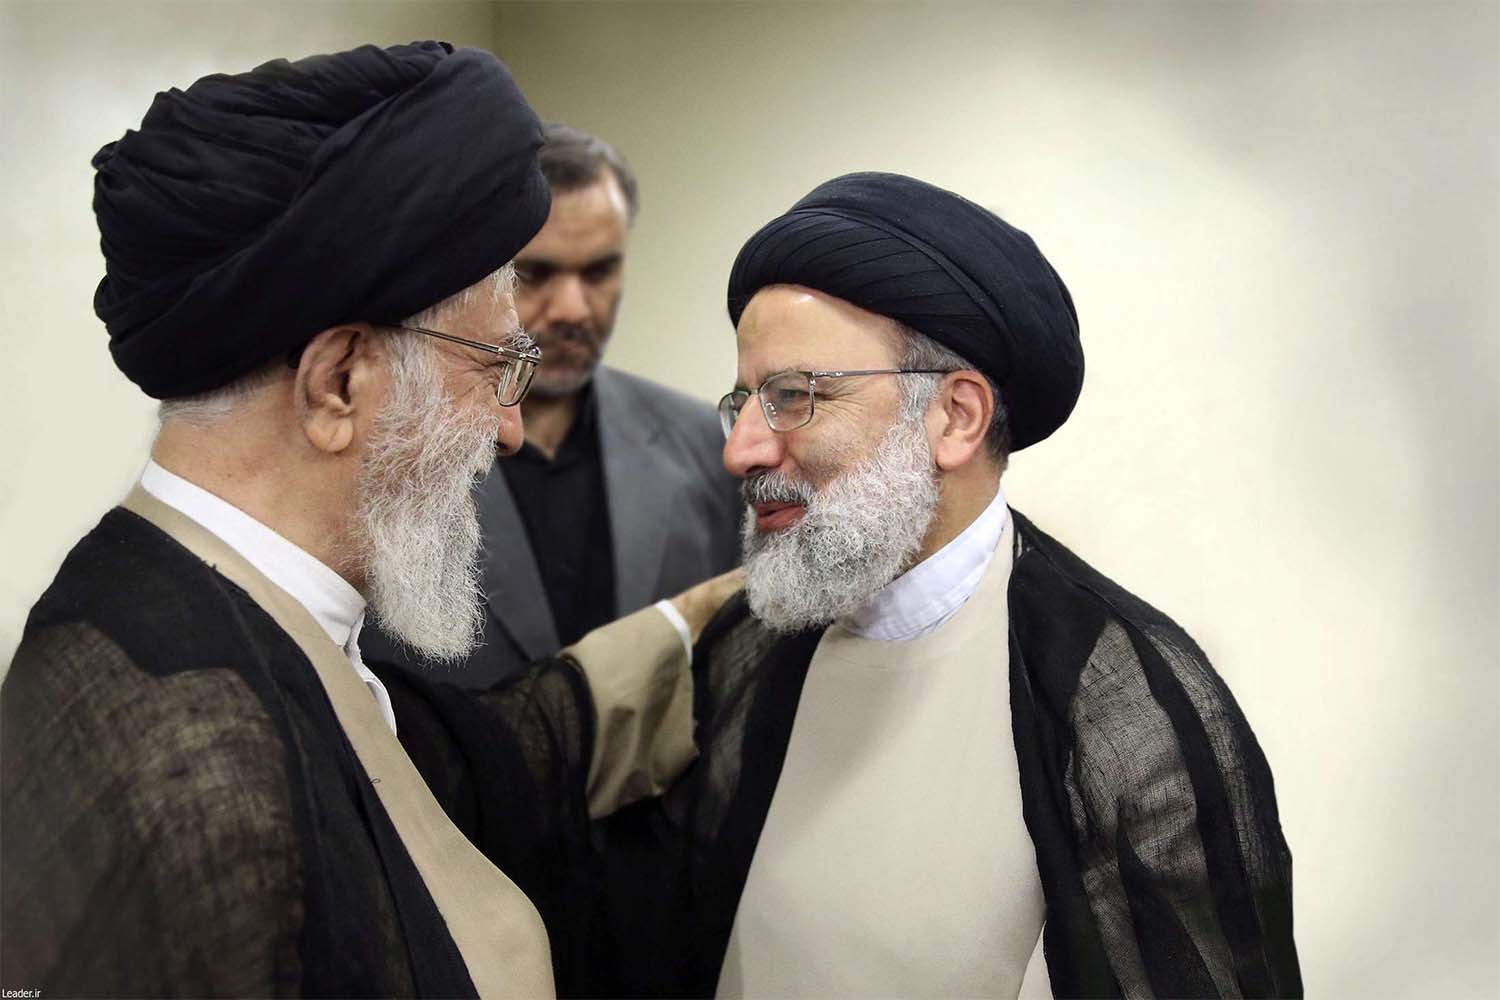 ranian Supreme Leader Ayatollah Khamenei talks to Ebrahim Raisi